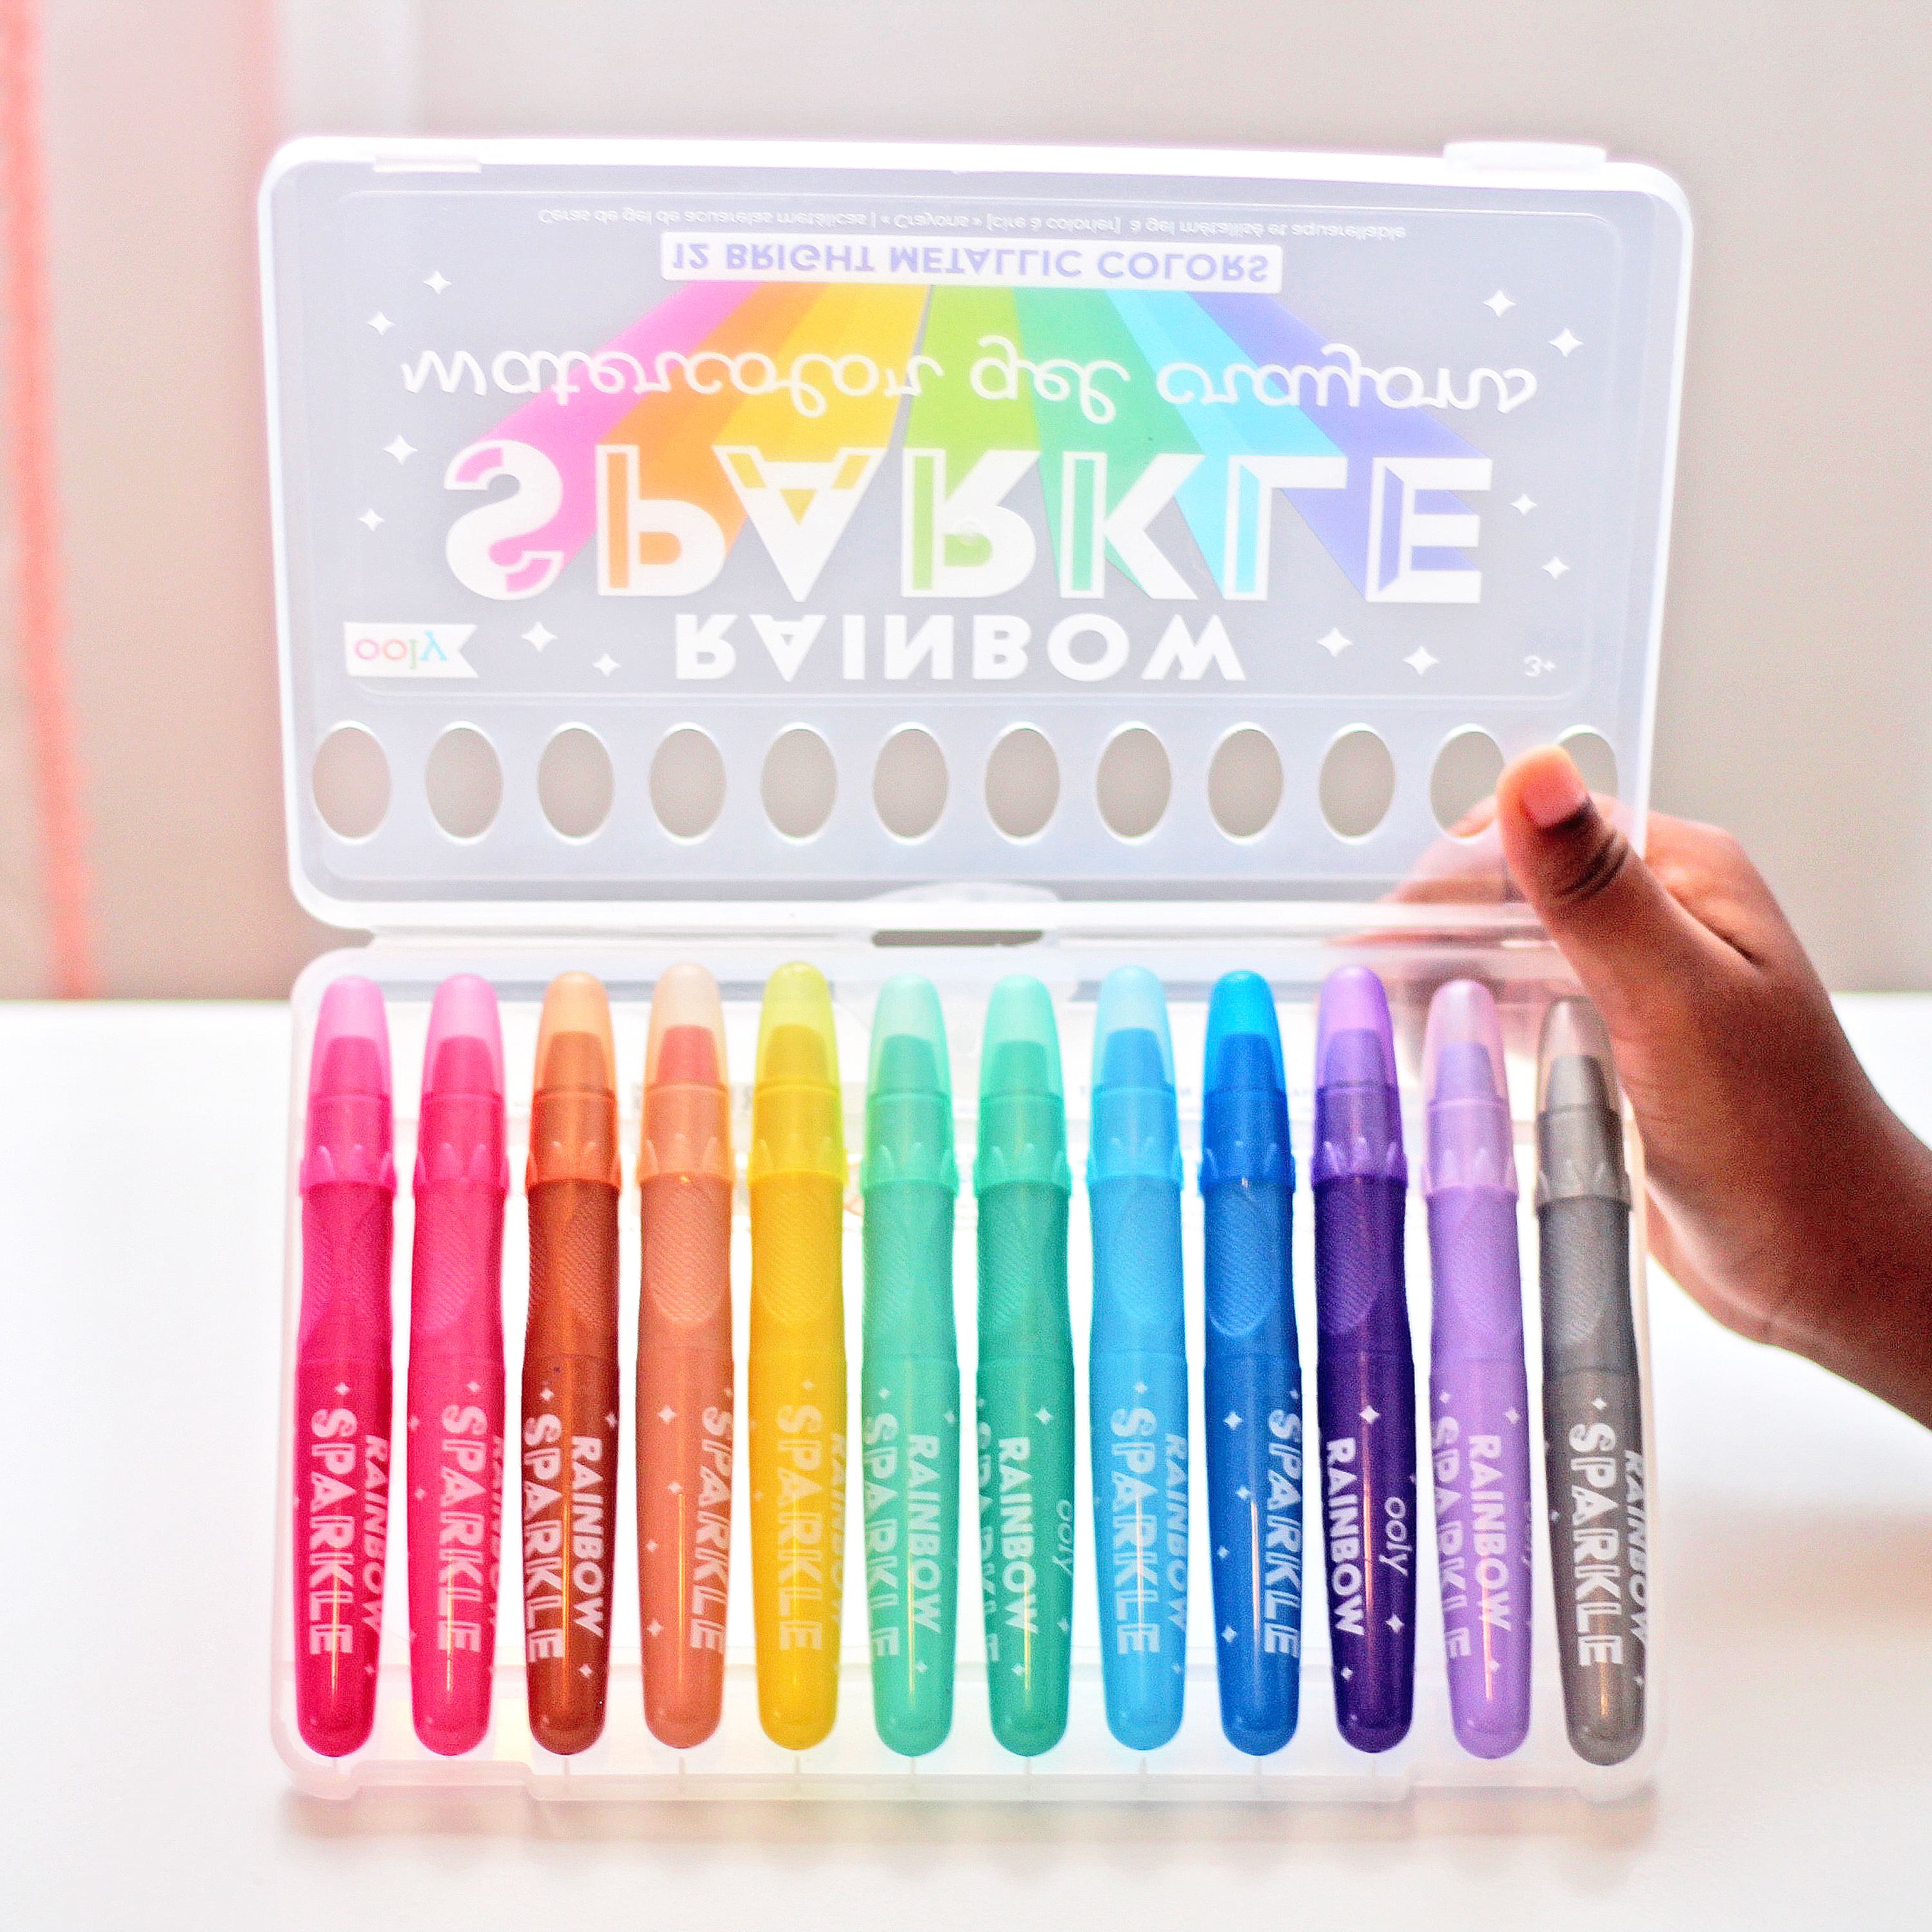 Ooly - Rainbow Sparkle Watercolor Gel Crayons